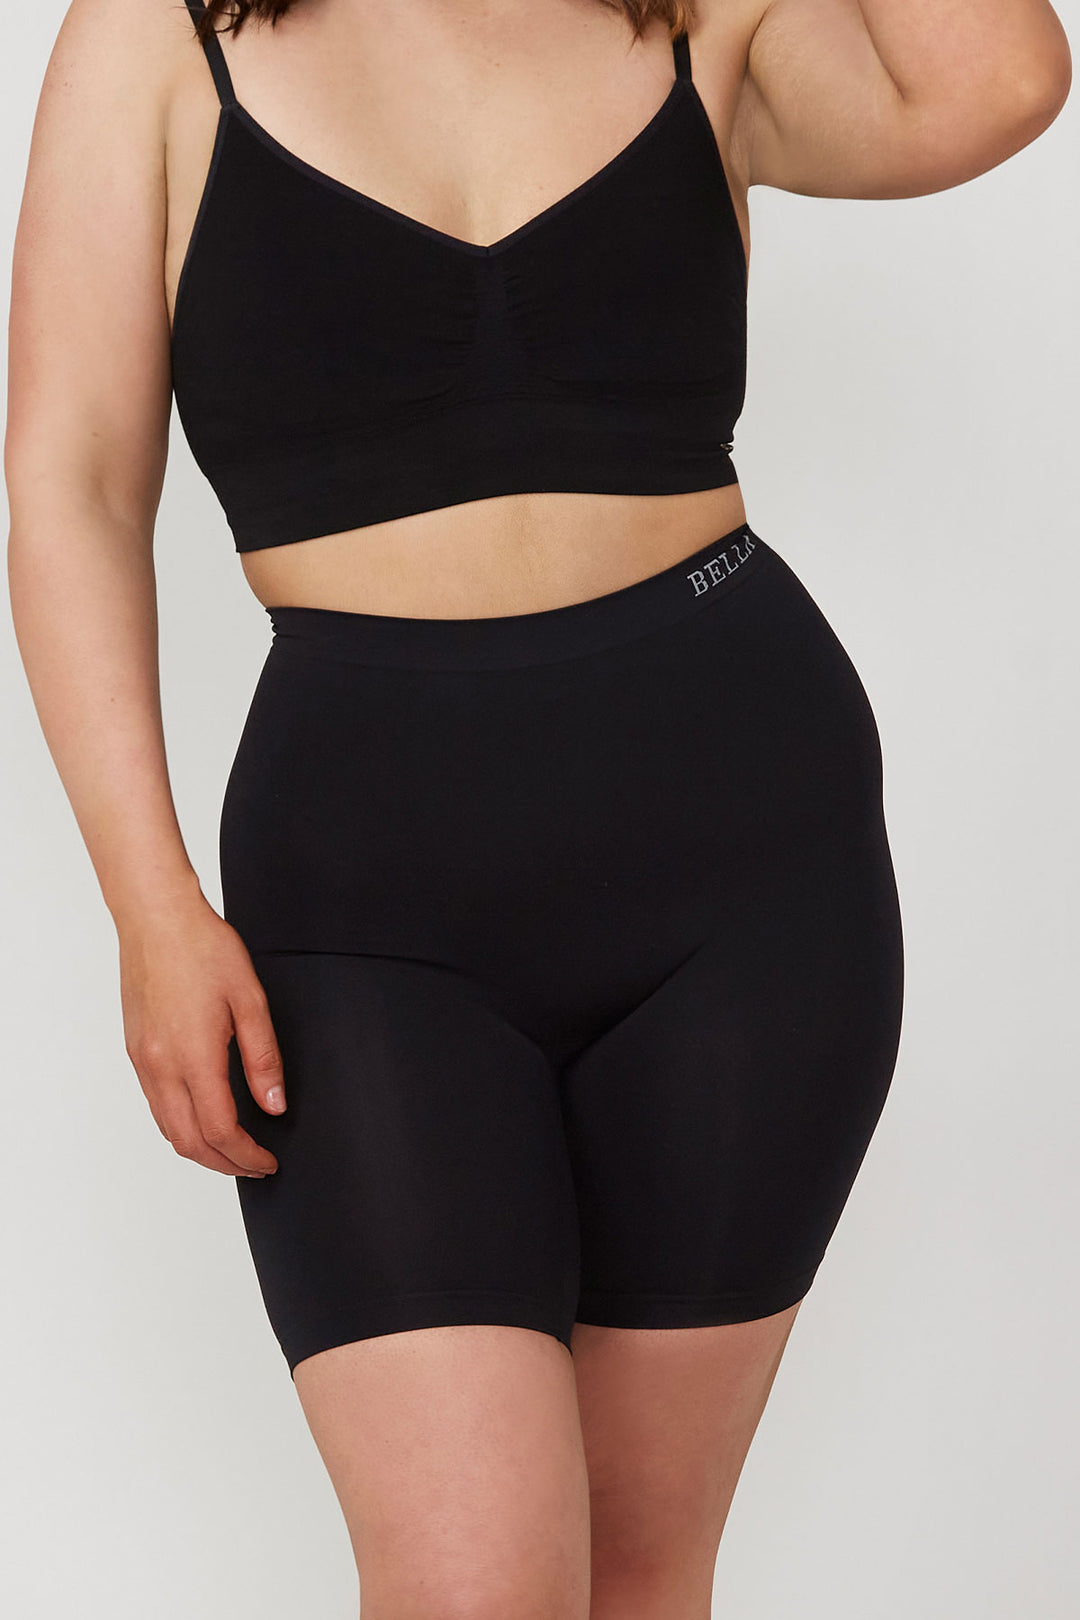 Women's anti-chafing underwear shorts Australia | Bella Bodies Australia | Coolfit Everday Anti Chafing Shorts | Black | front